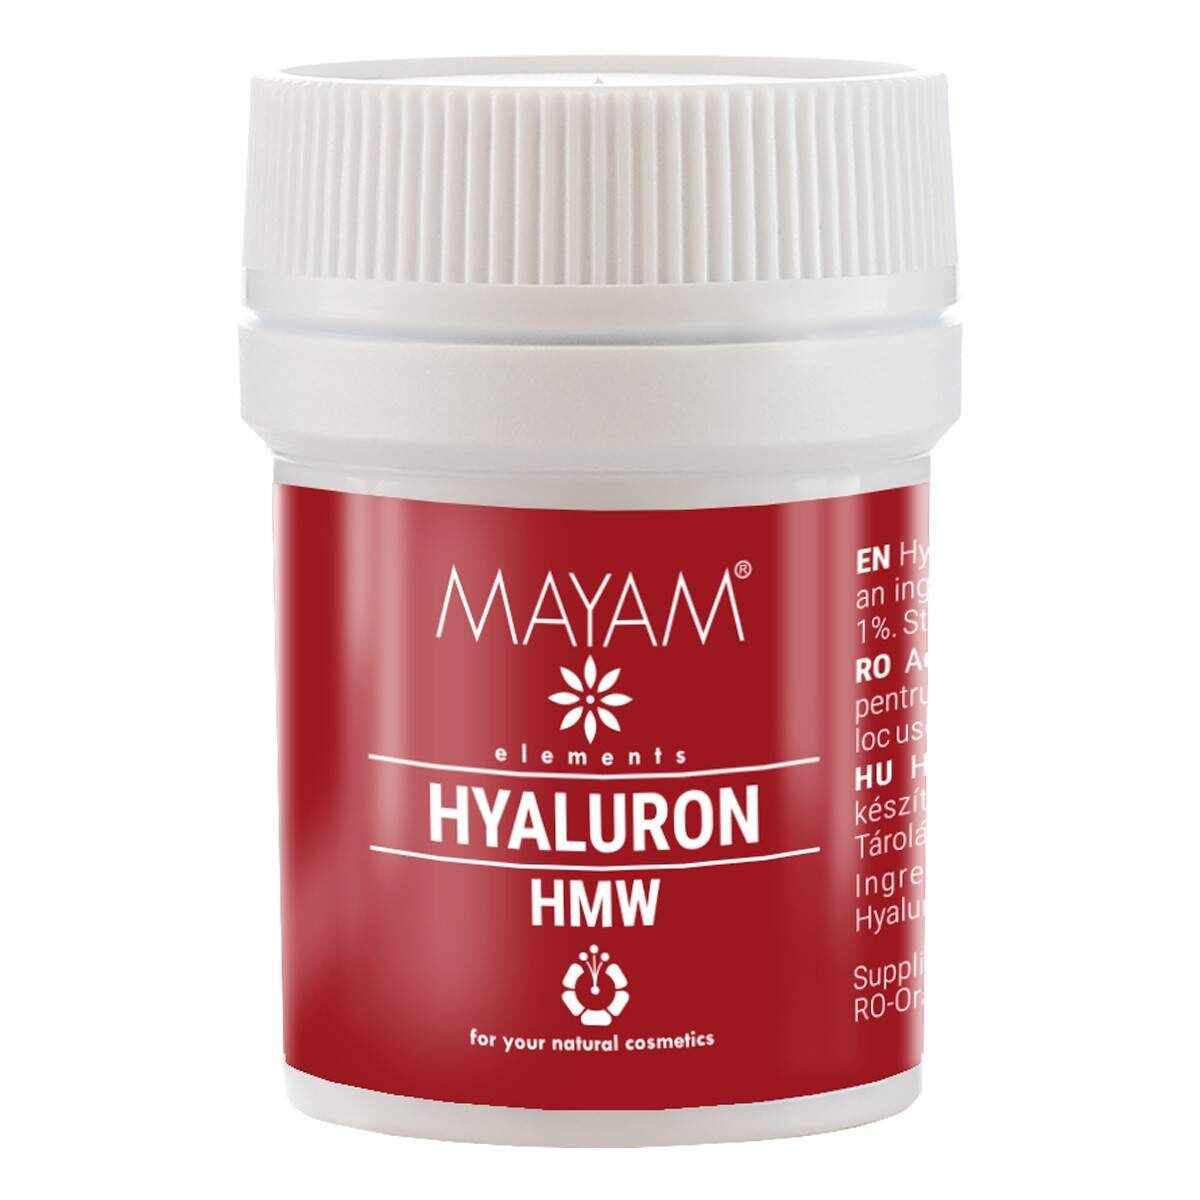 Acid hialuronic pur, HMW, 1g - Mayam